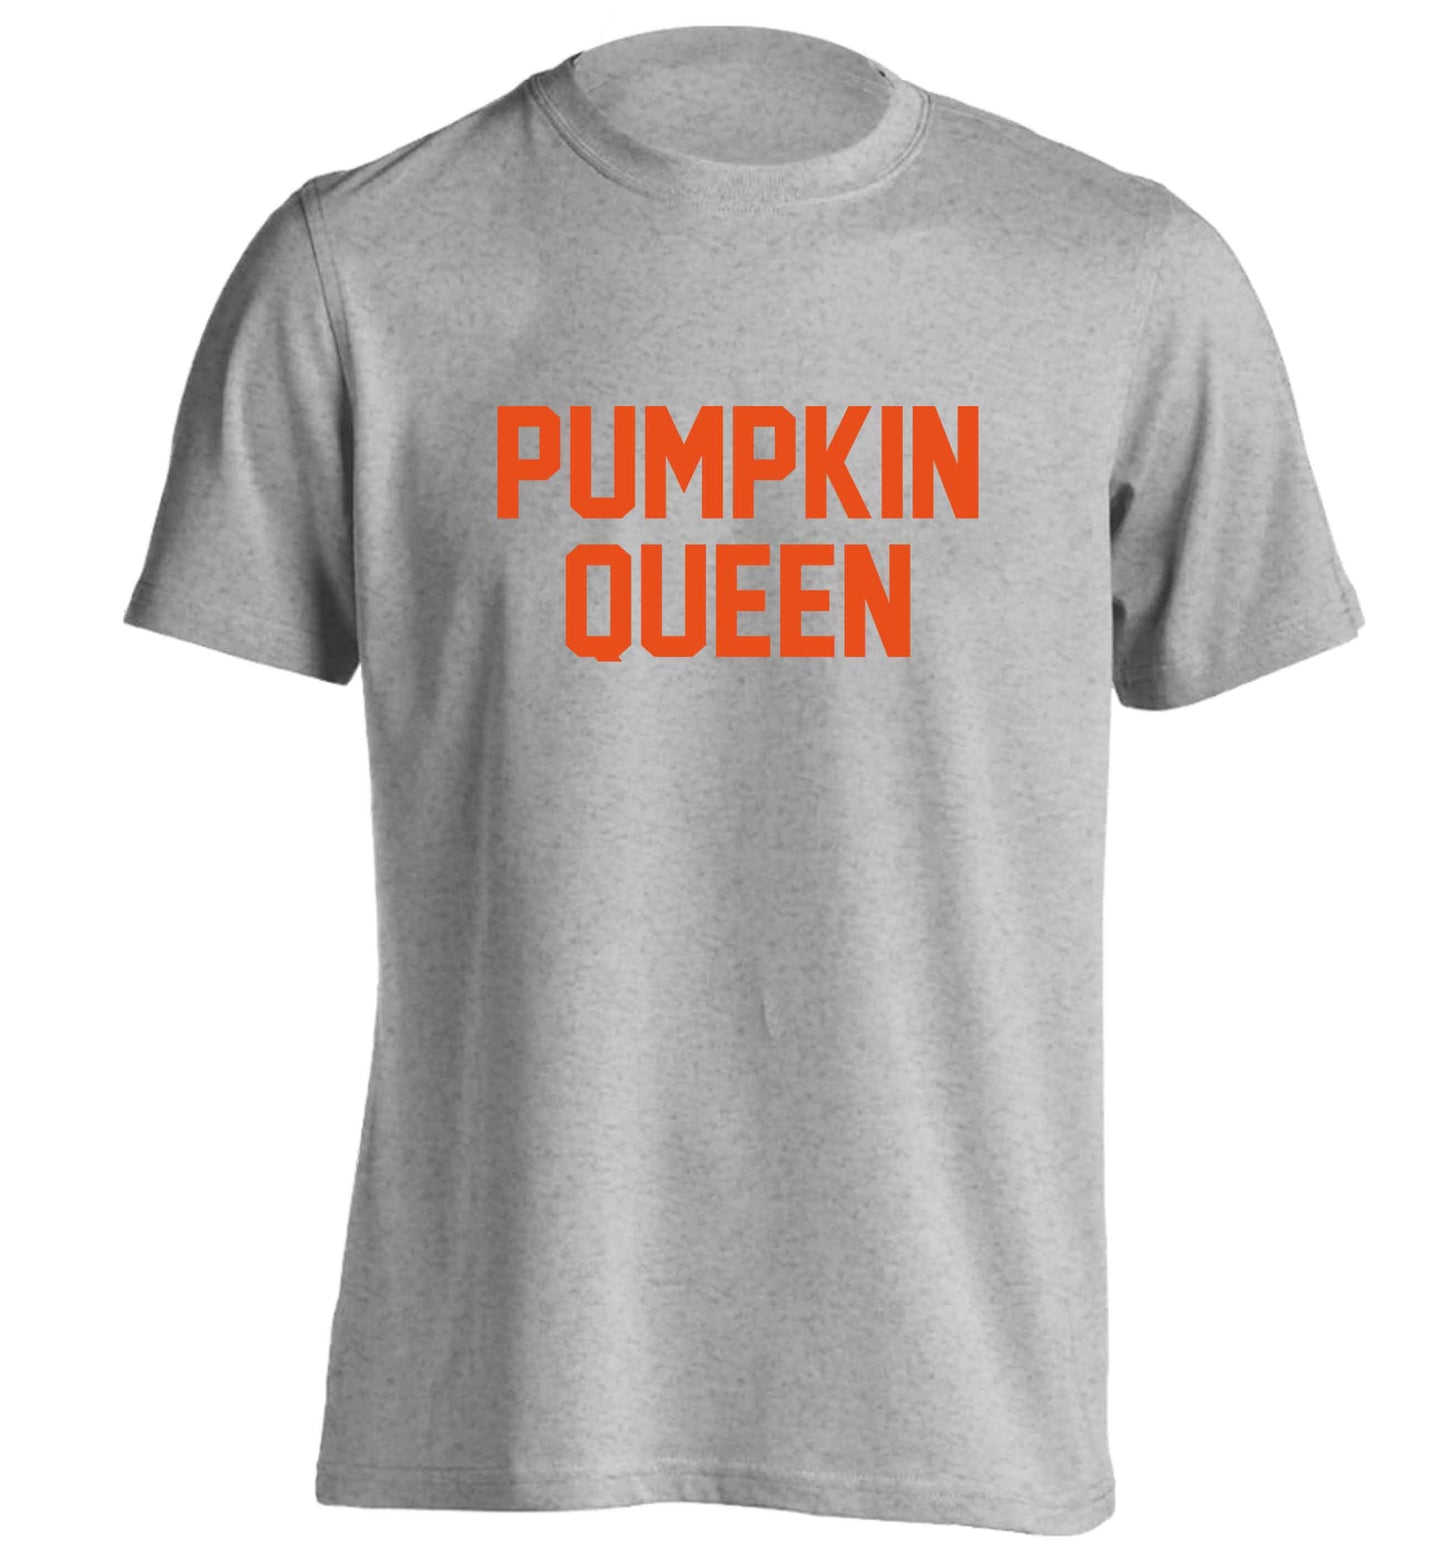 Pumpkin Queen adults unisex grey Tshirt 2XL